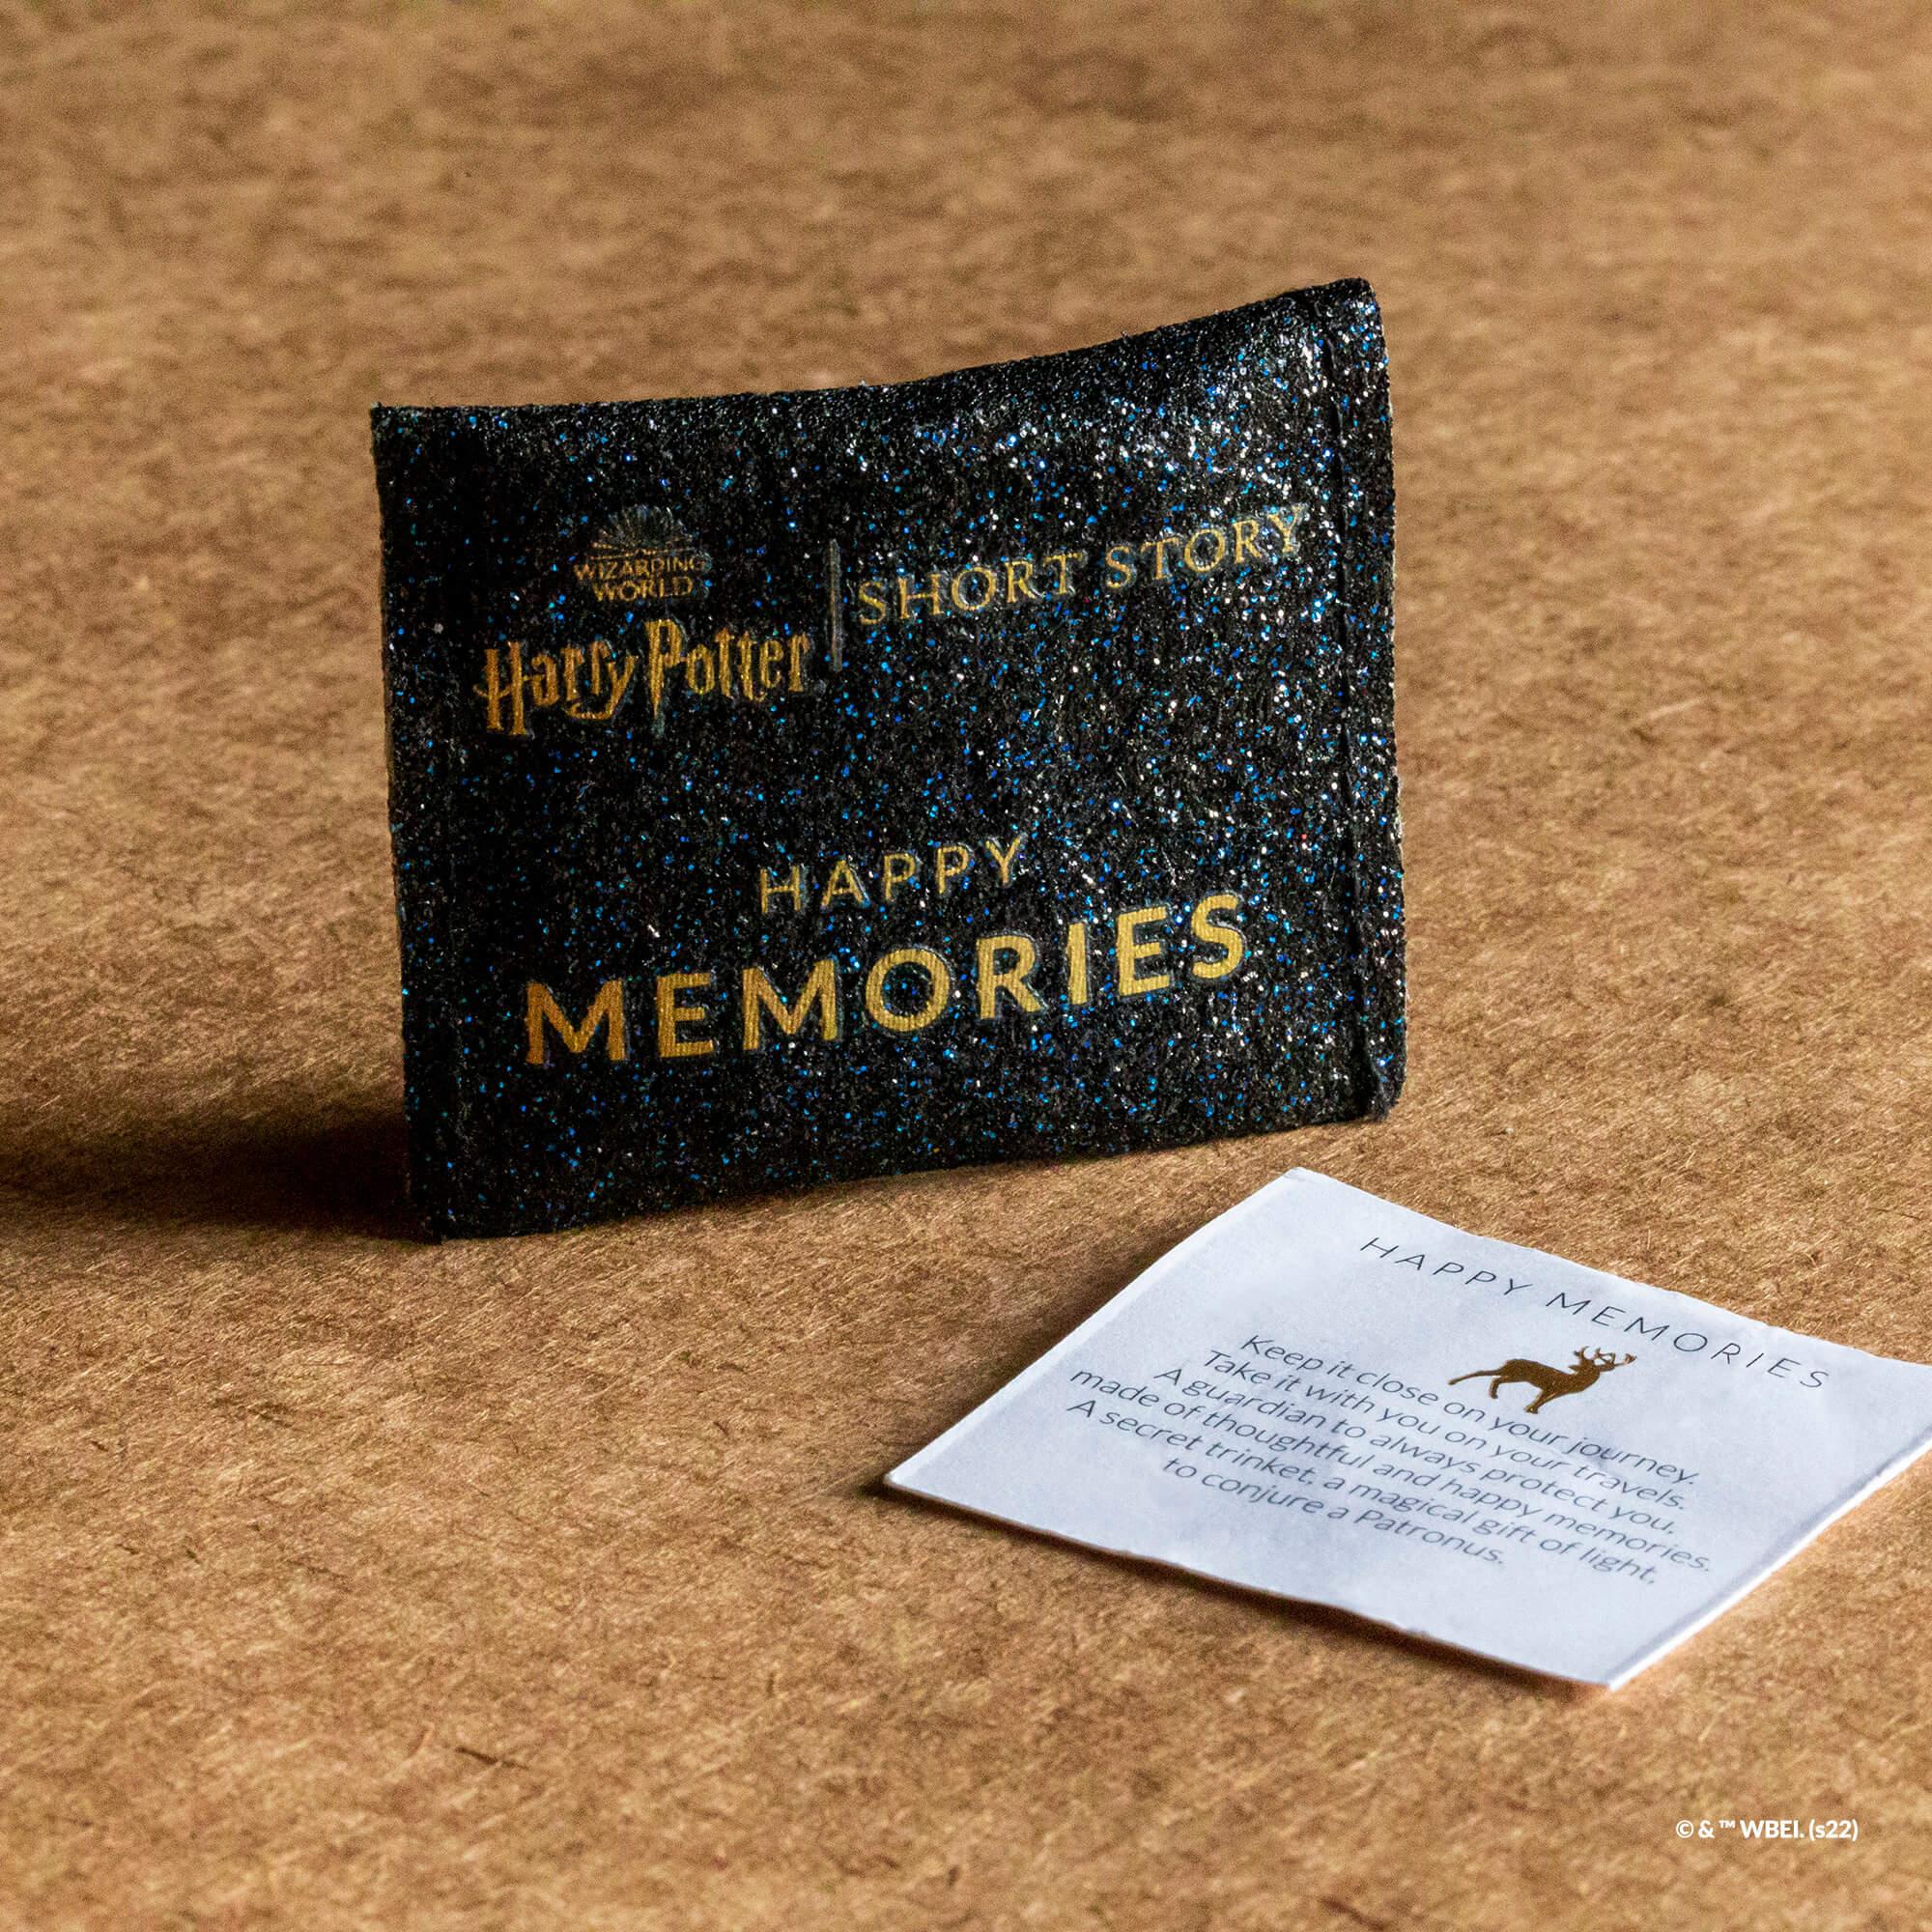 Short Story - Harry Potter Trinket Pouch Expecto Patronum